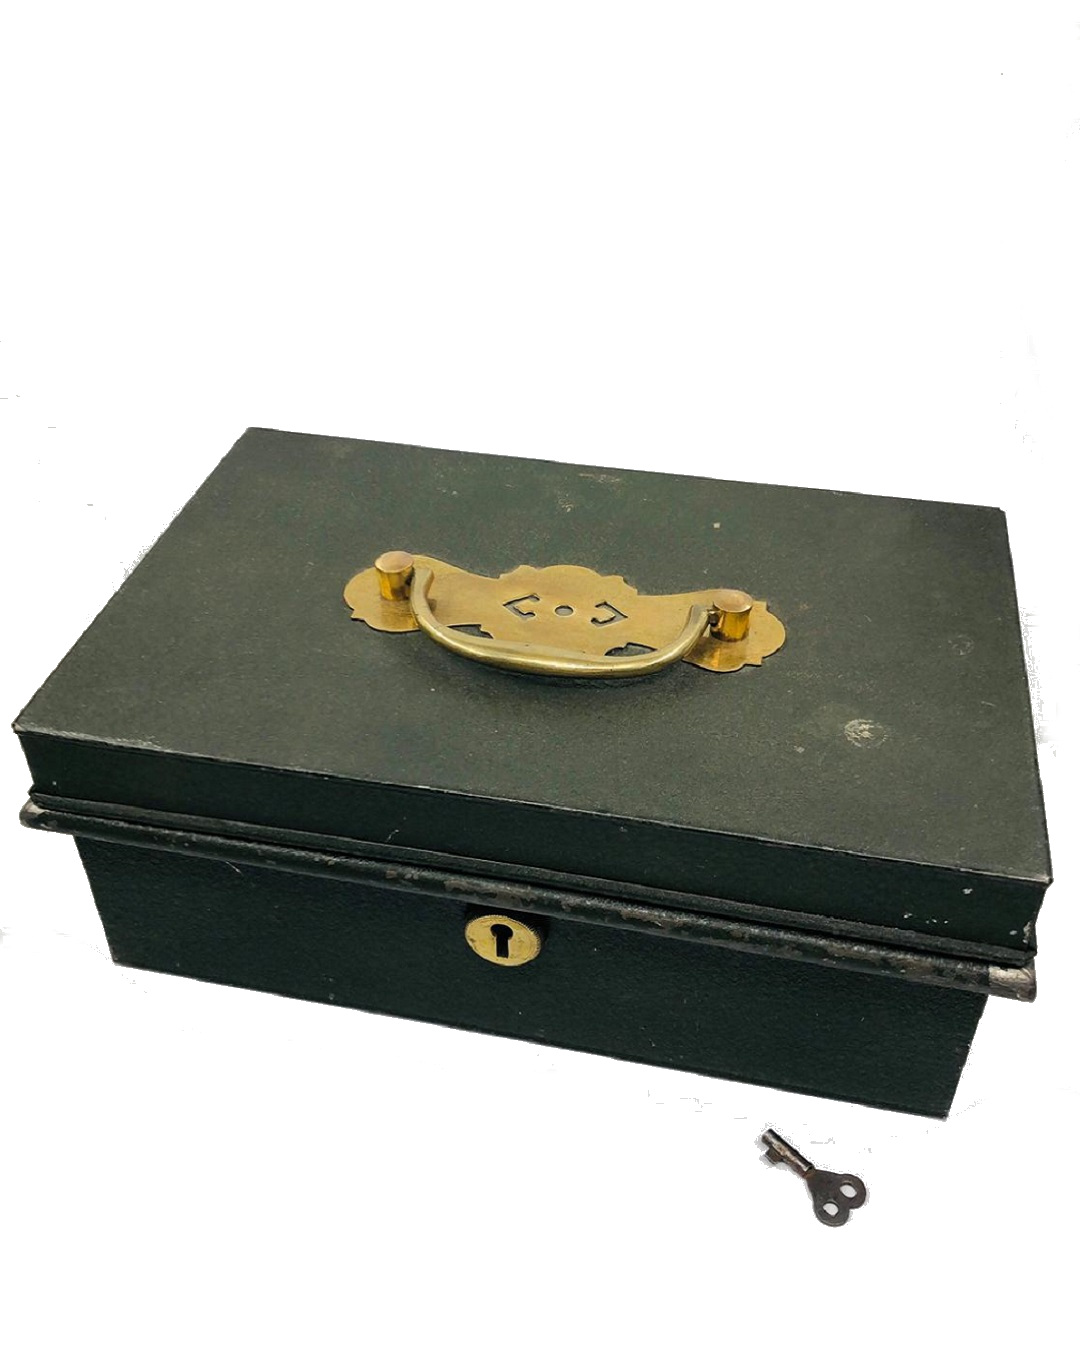 Cash money box with key